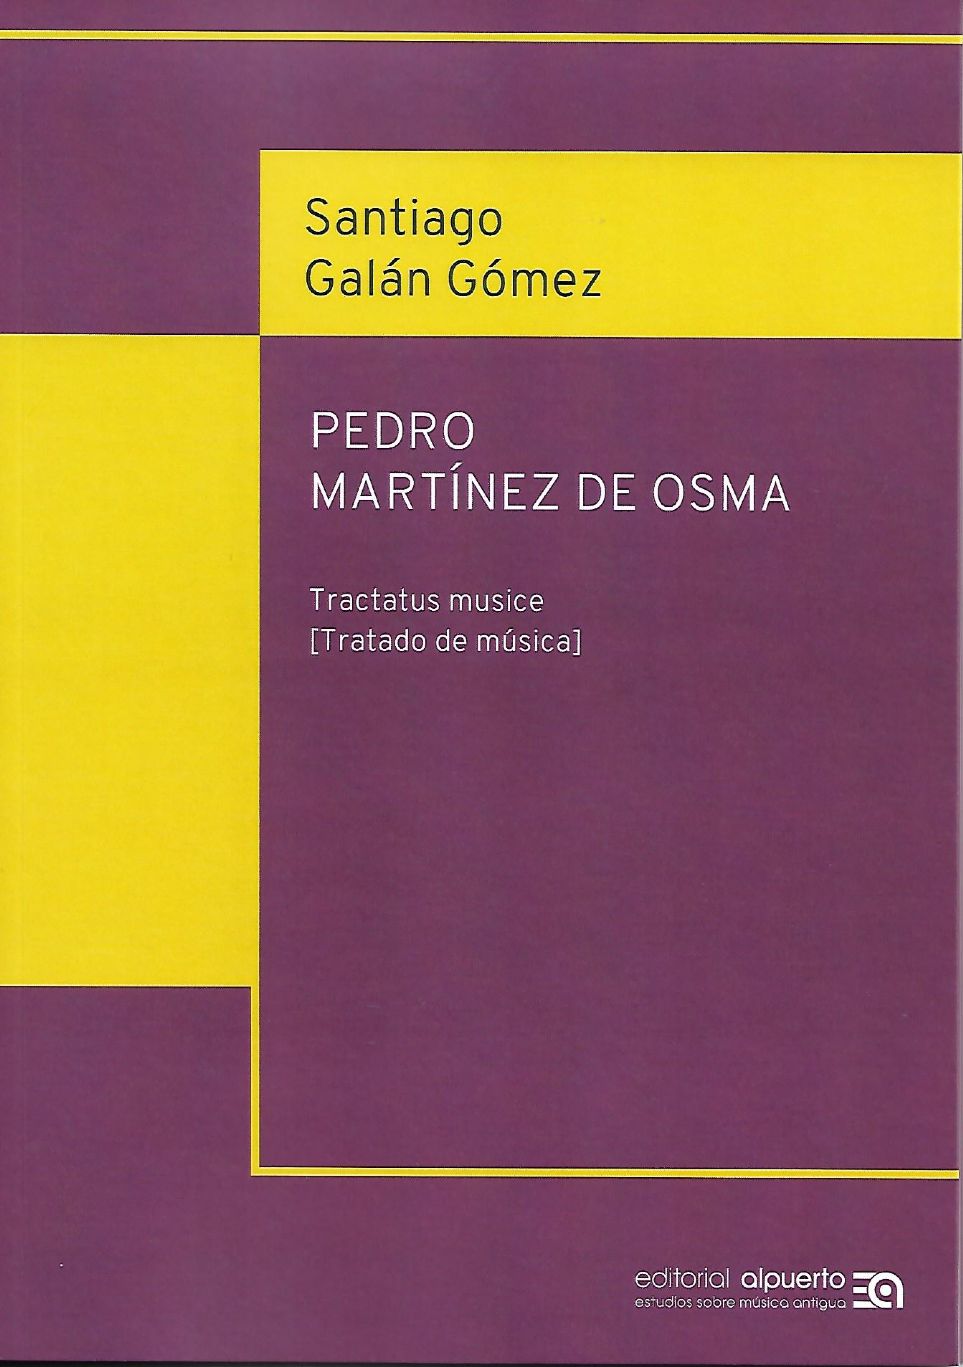 Tractatus musice de Pedro Martnez de Osma